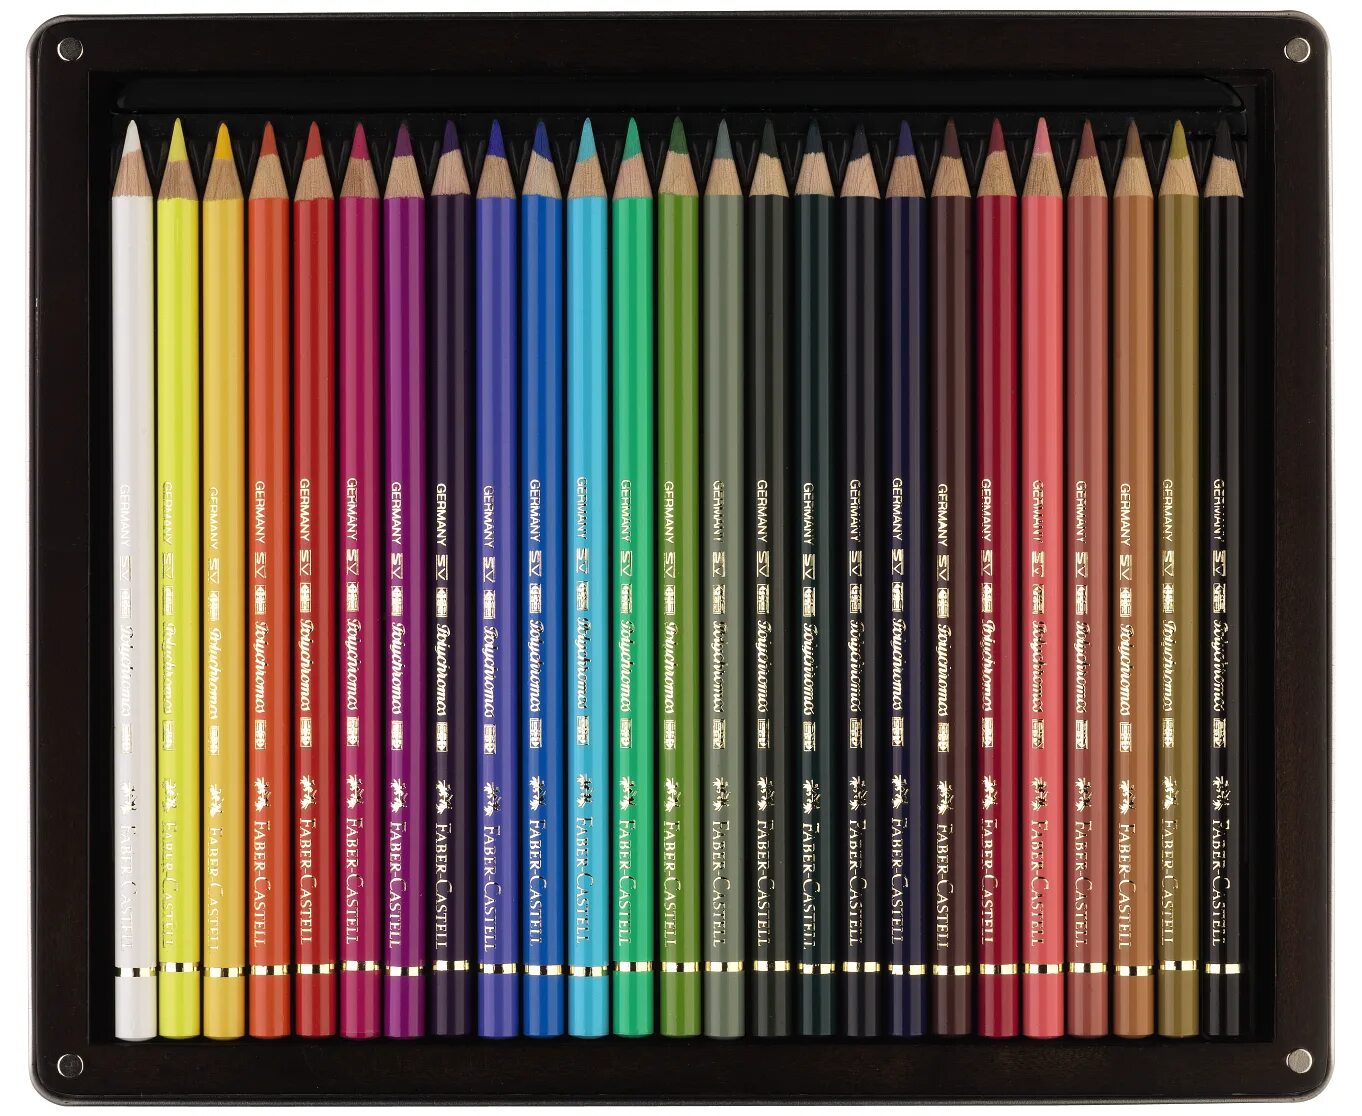 Creioane. Faber Castell colored Pencils. Faber Castell 24 цвета карандаши. Цветные карандаши по цветам. Порядки цветные